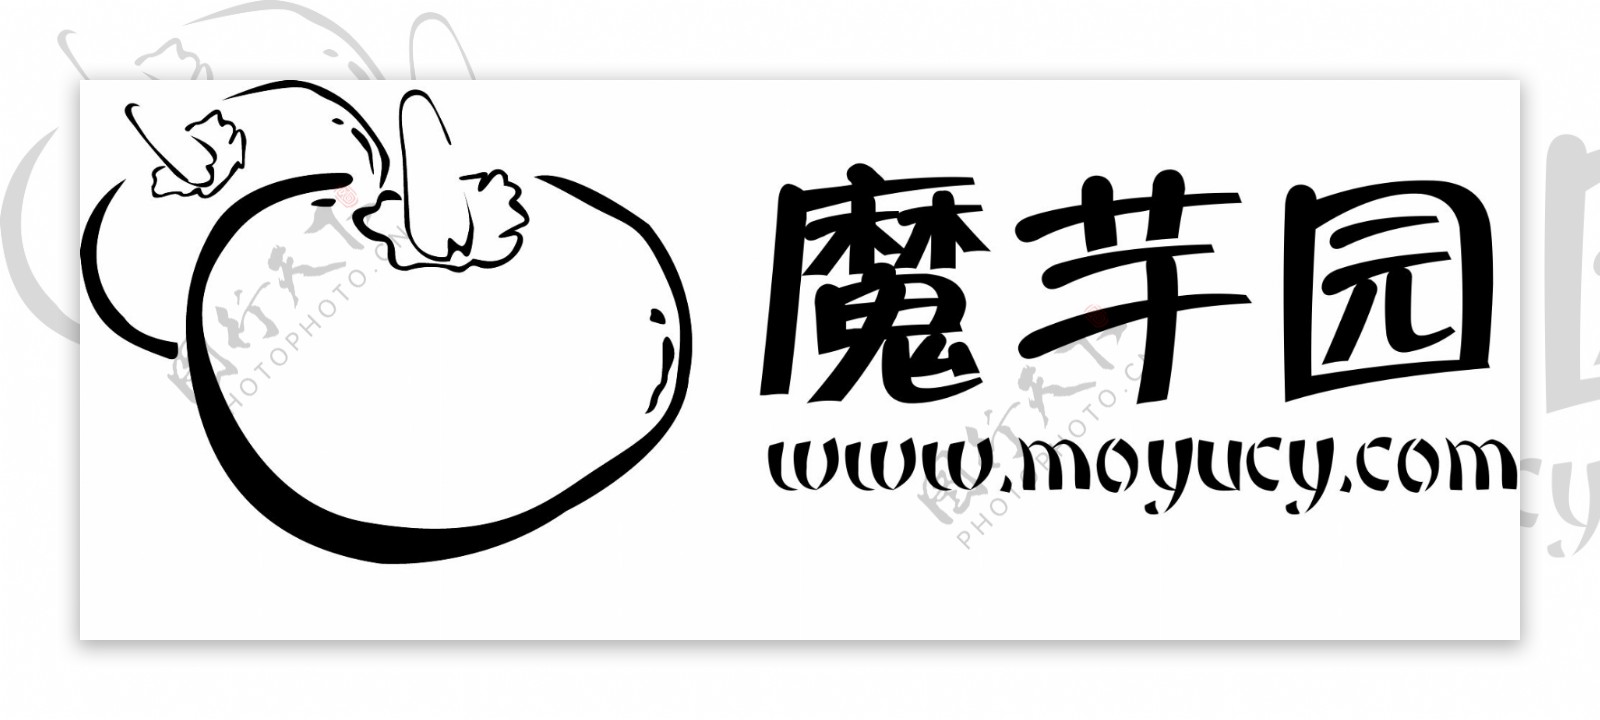 魔芋园logo